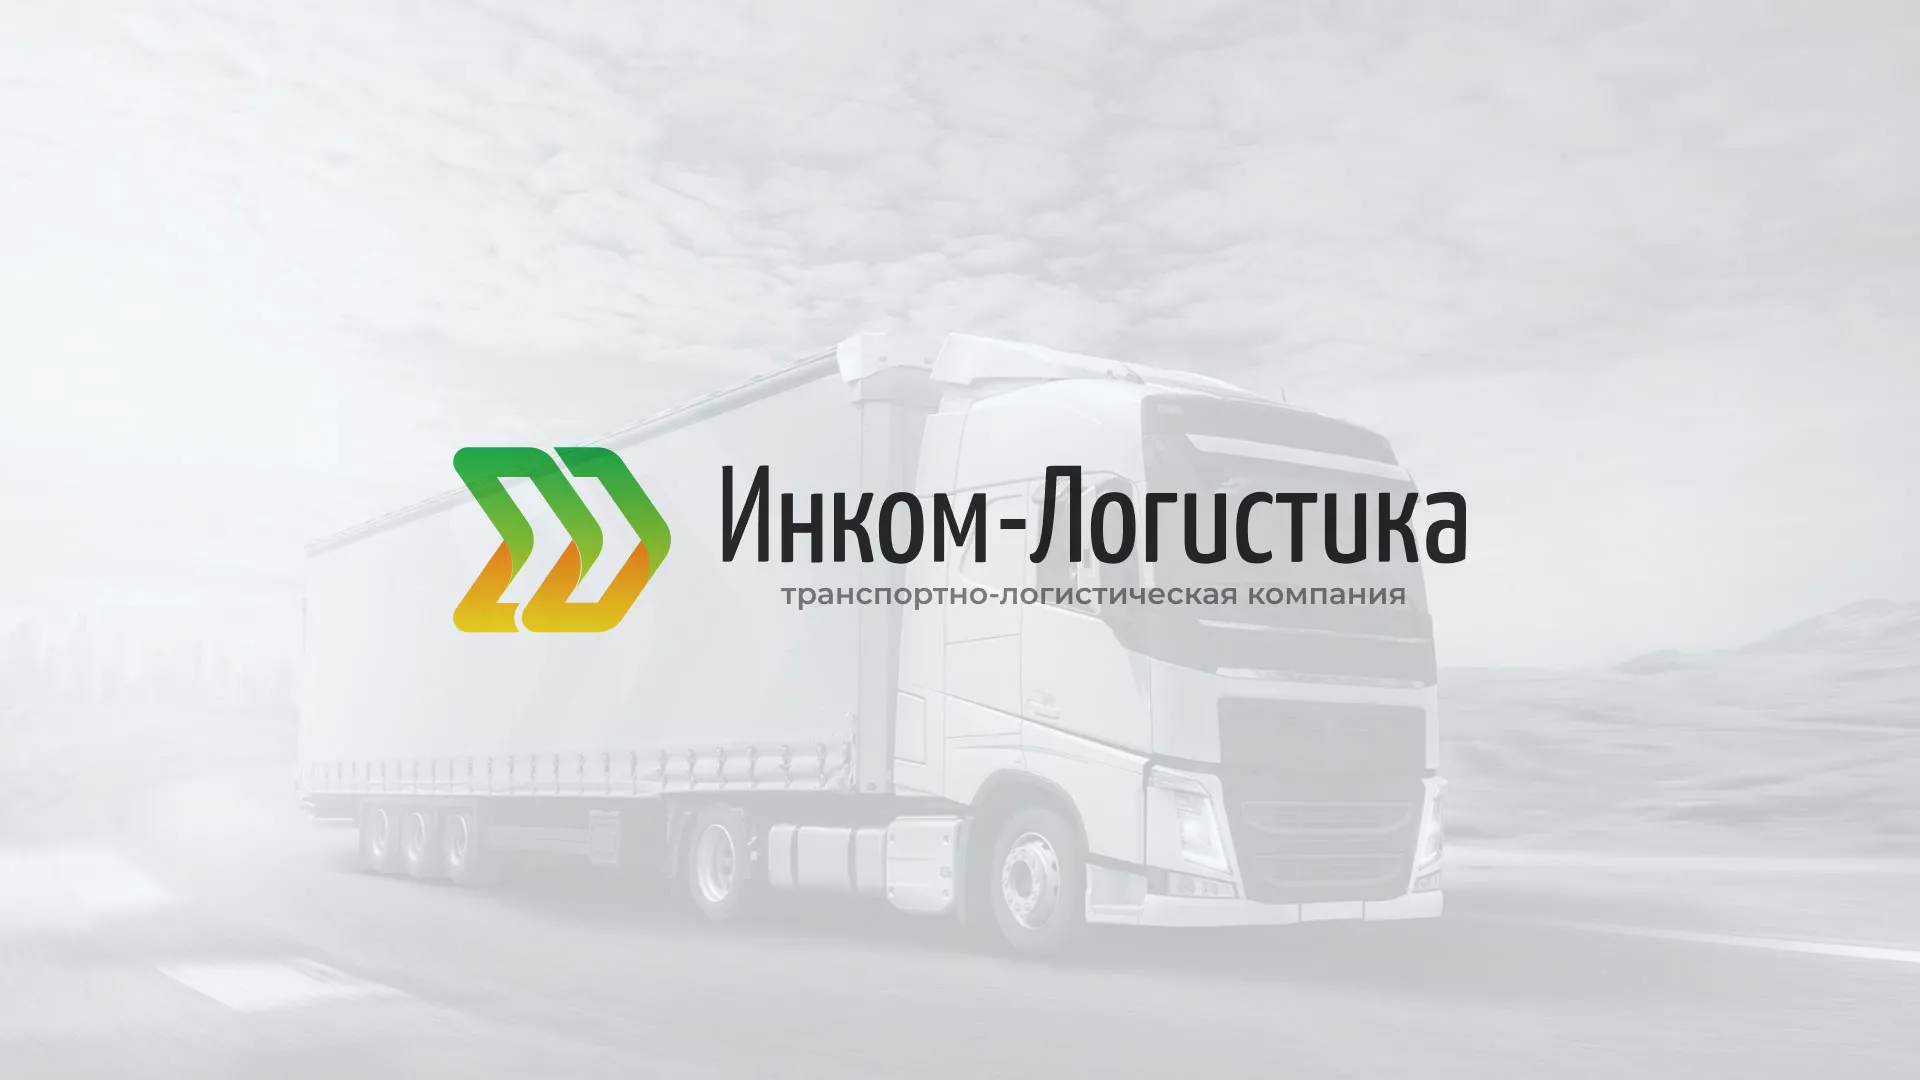 Разработка логотипа и сайта компании «Инком-Логистика» в Обнинске